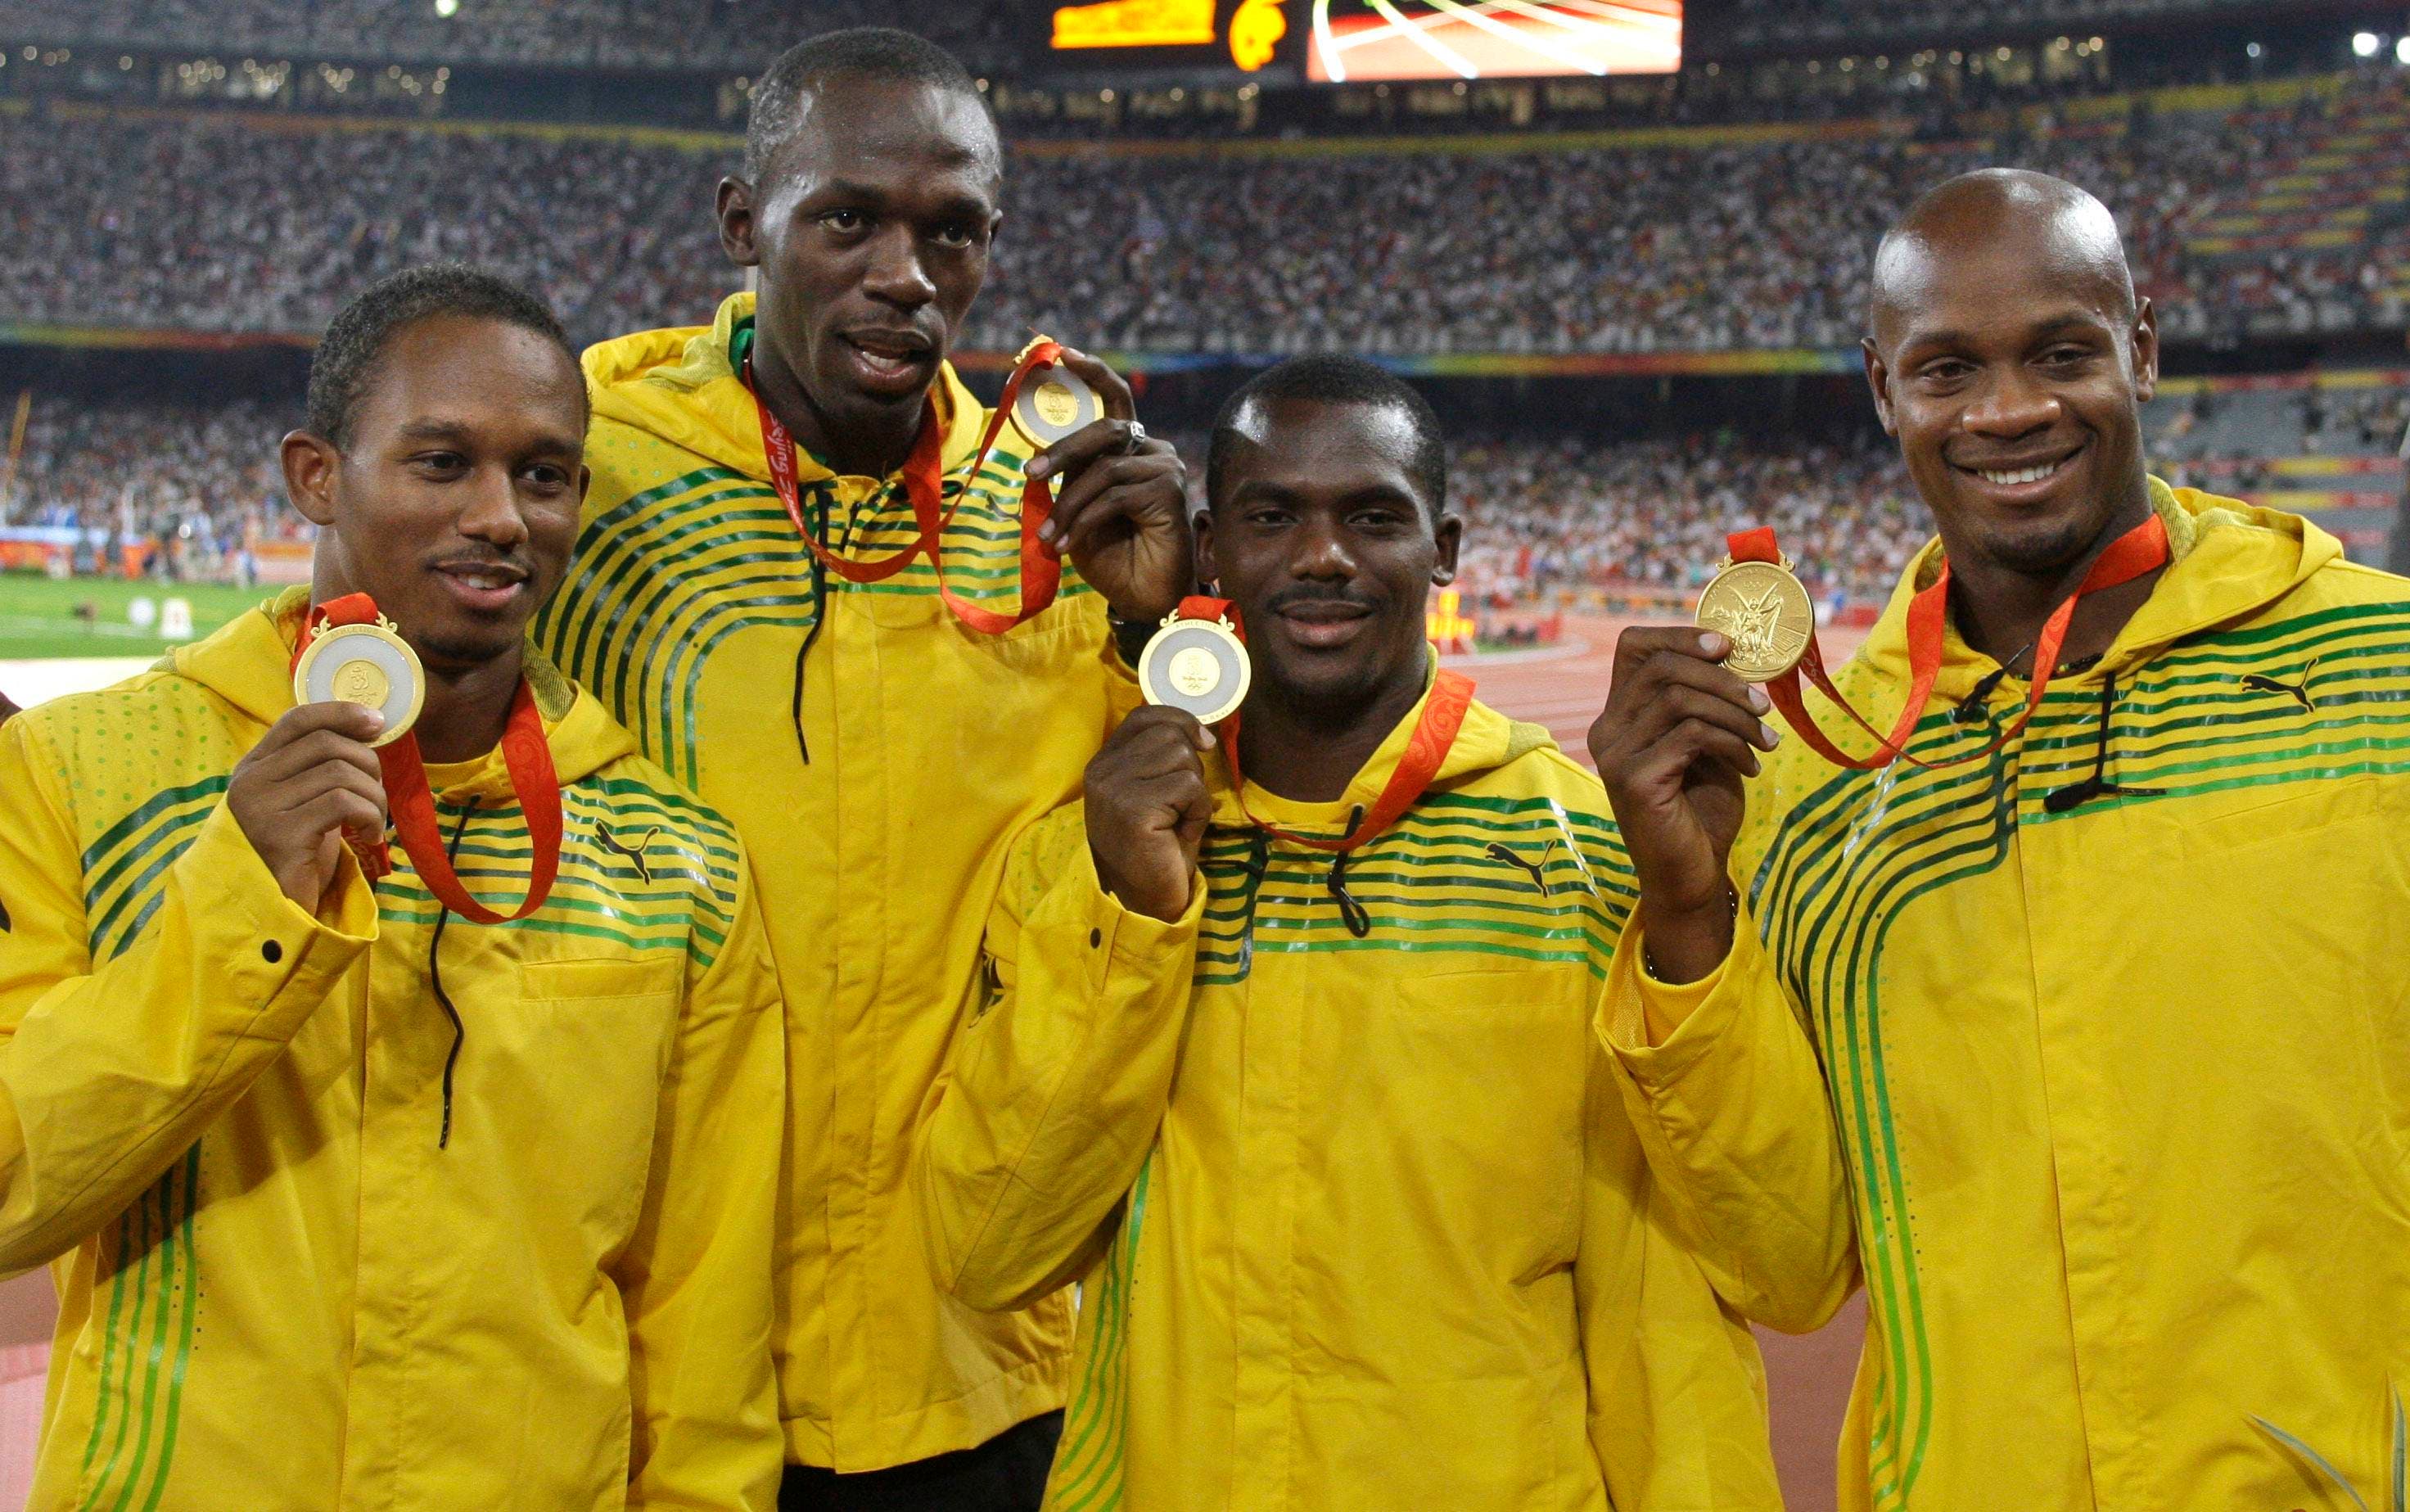 Usain Bolt pierde oro en relevos de 2008 por dopaje de compañero